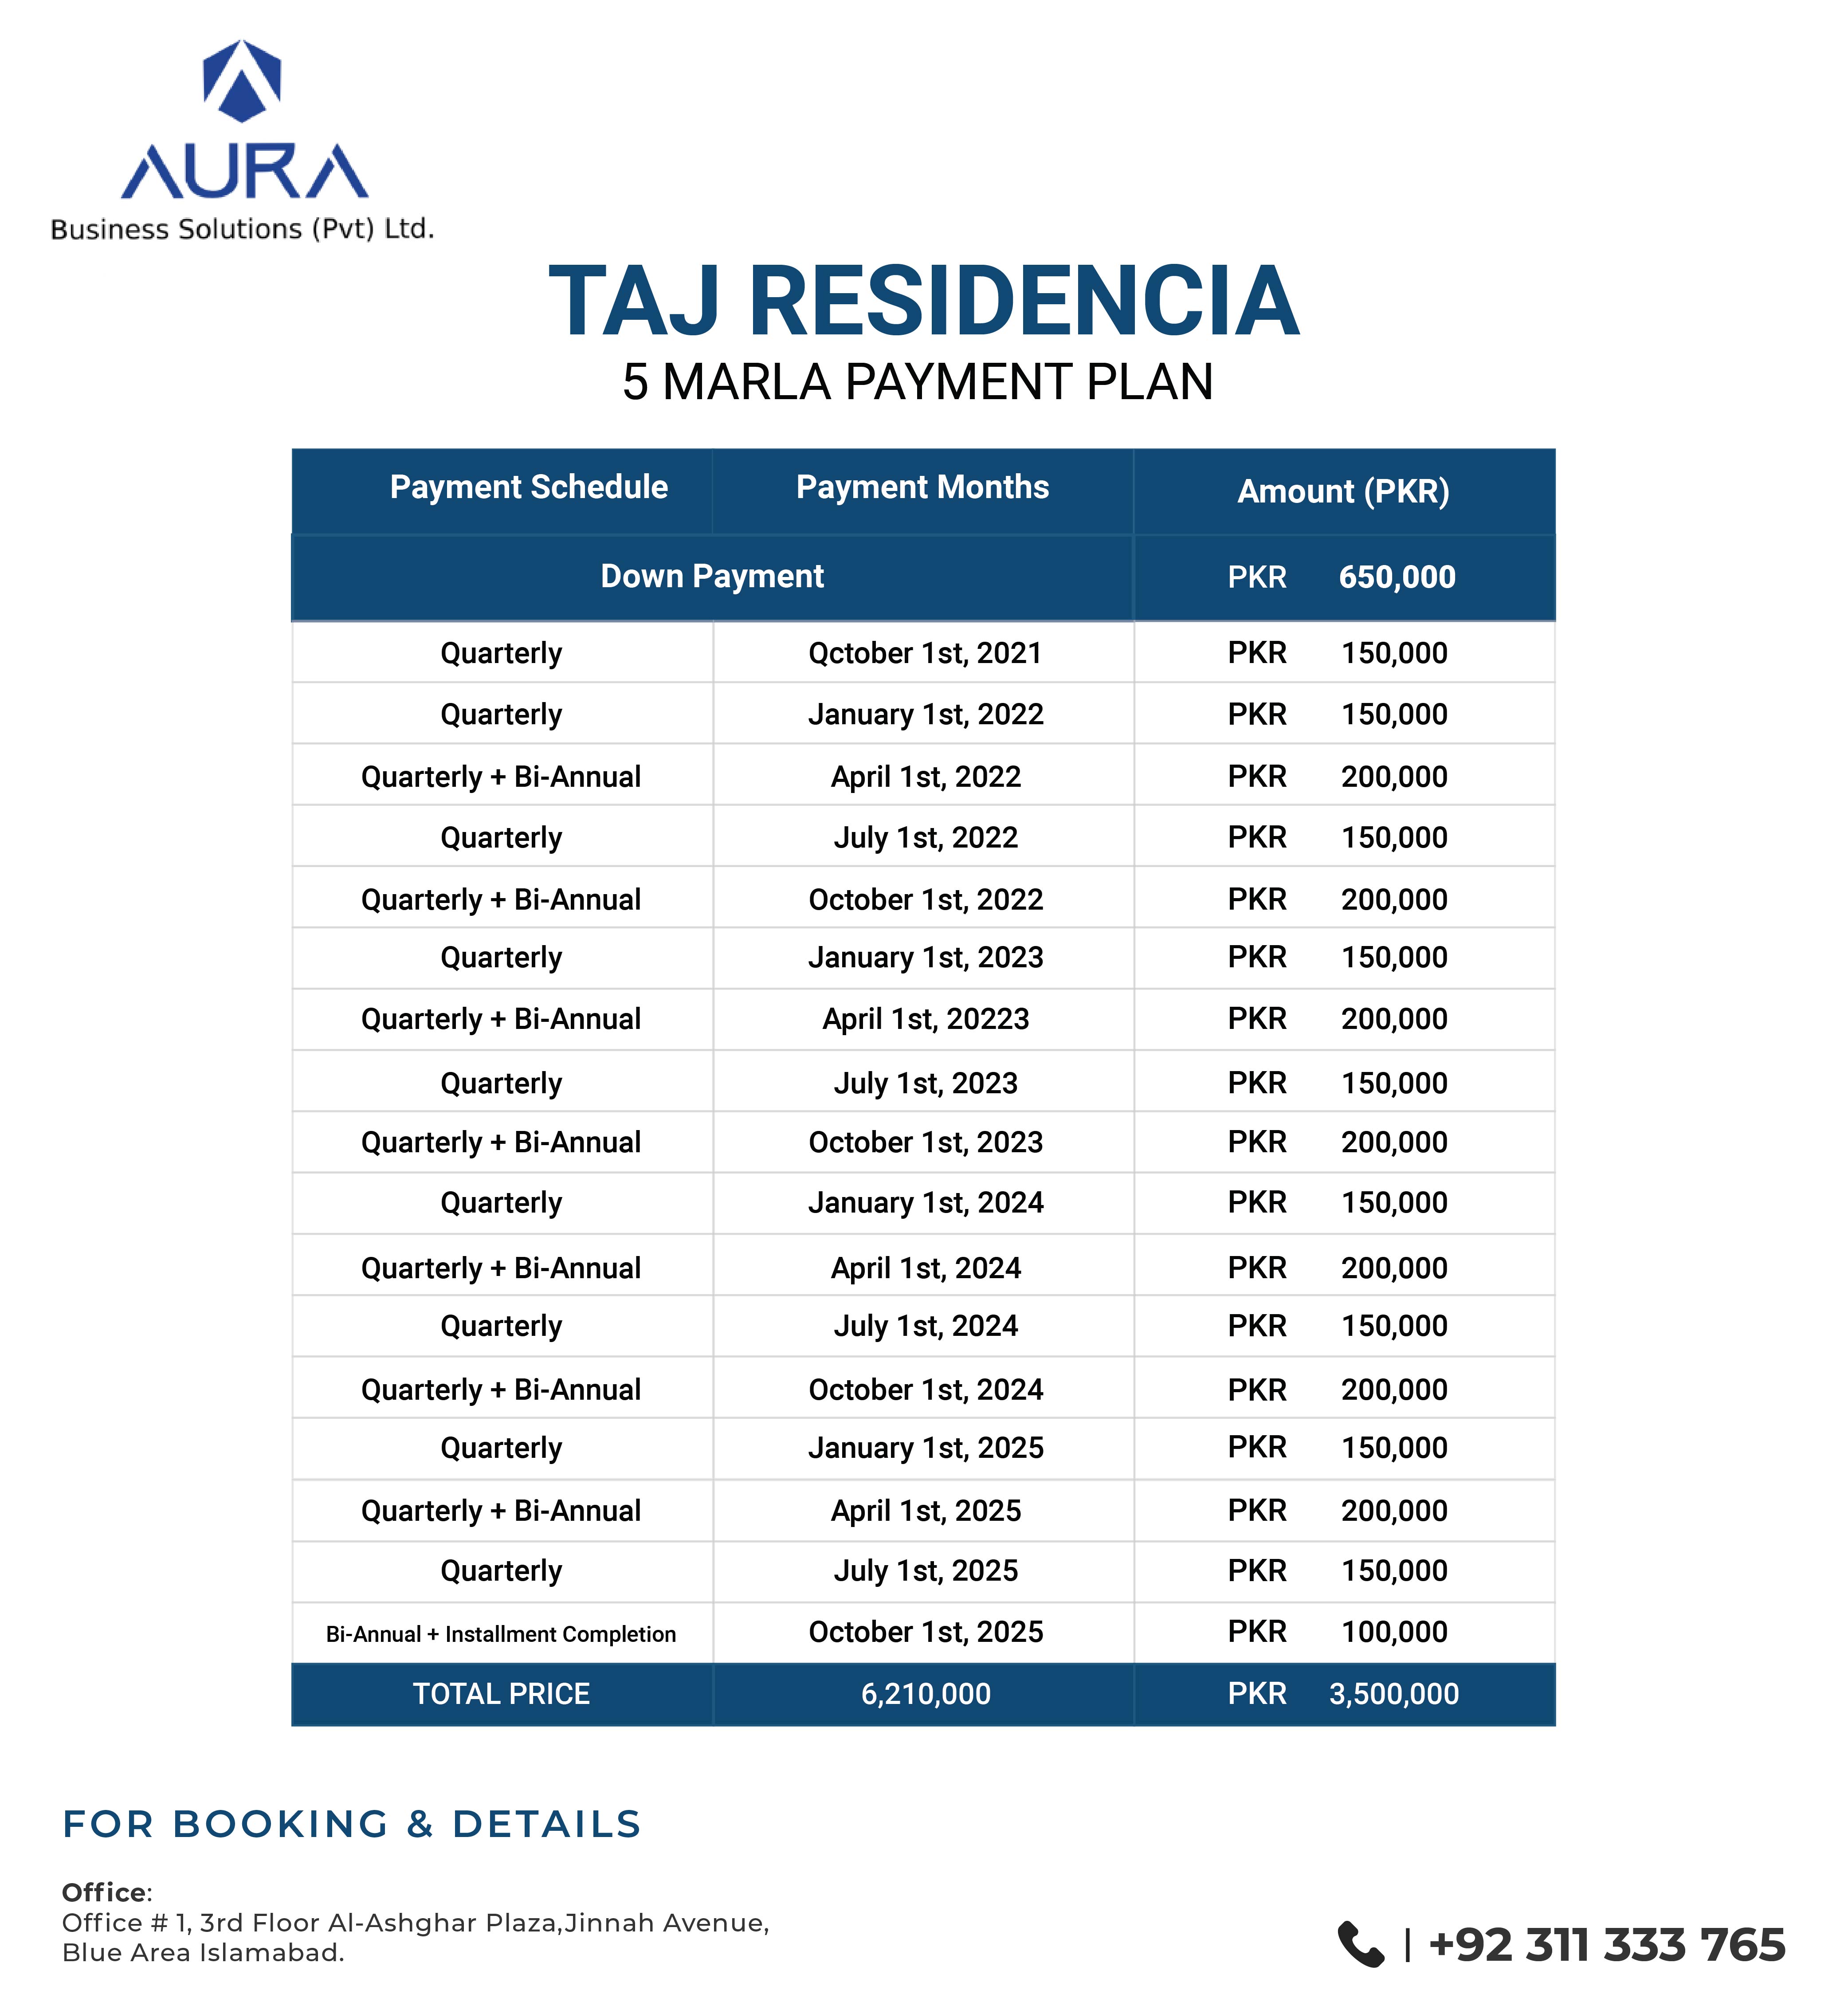 Taj Residencia 5 Marla Payment Plan